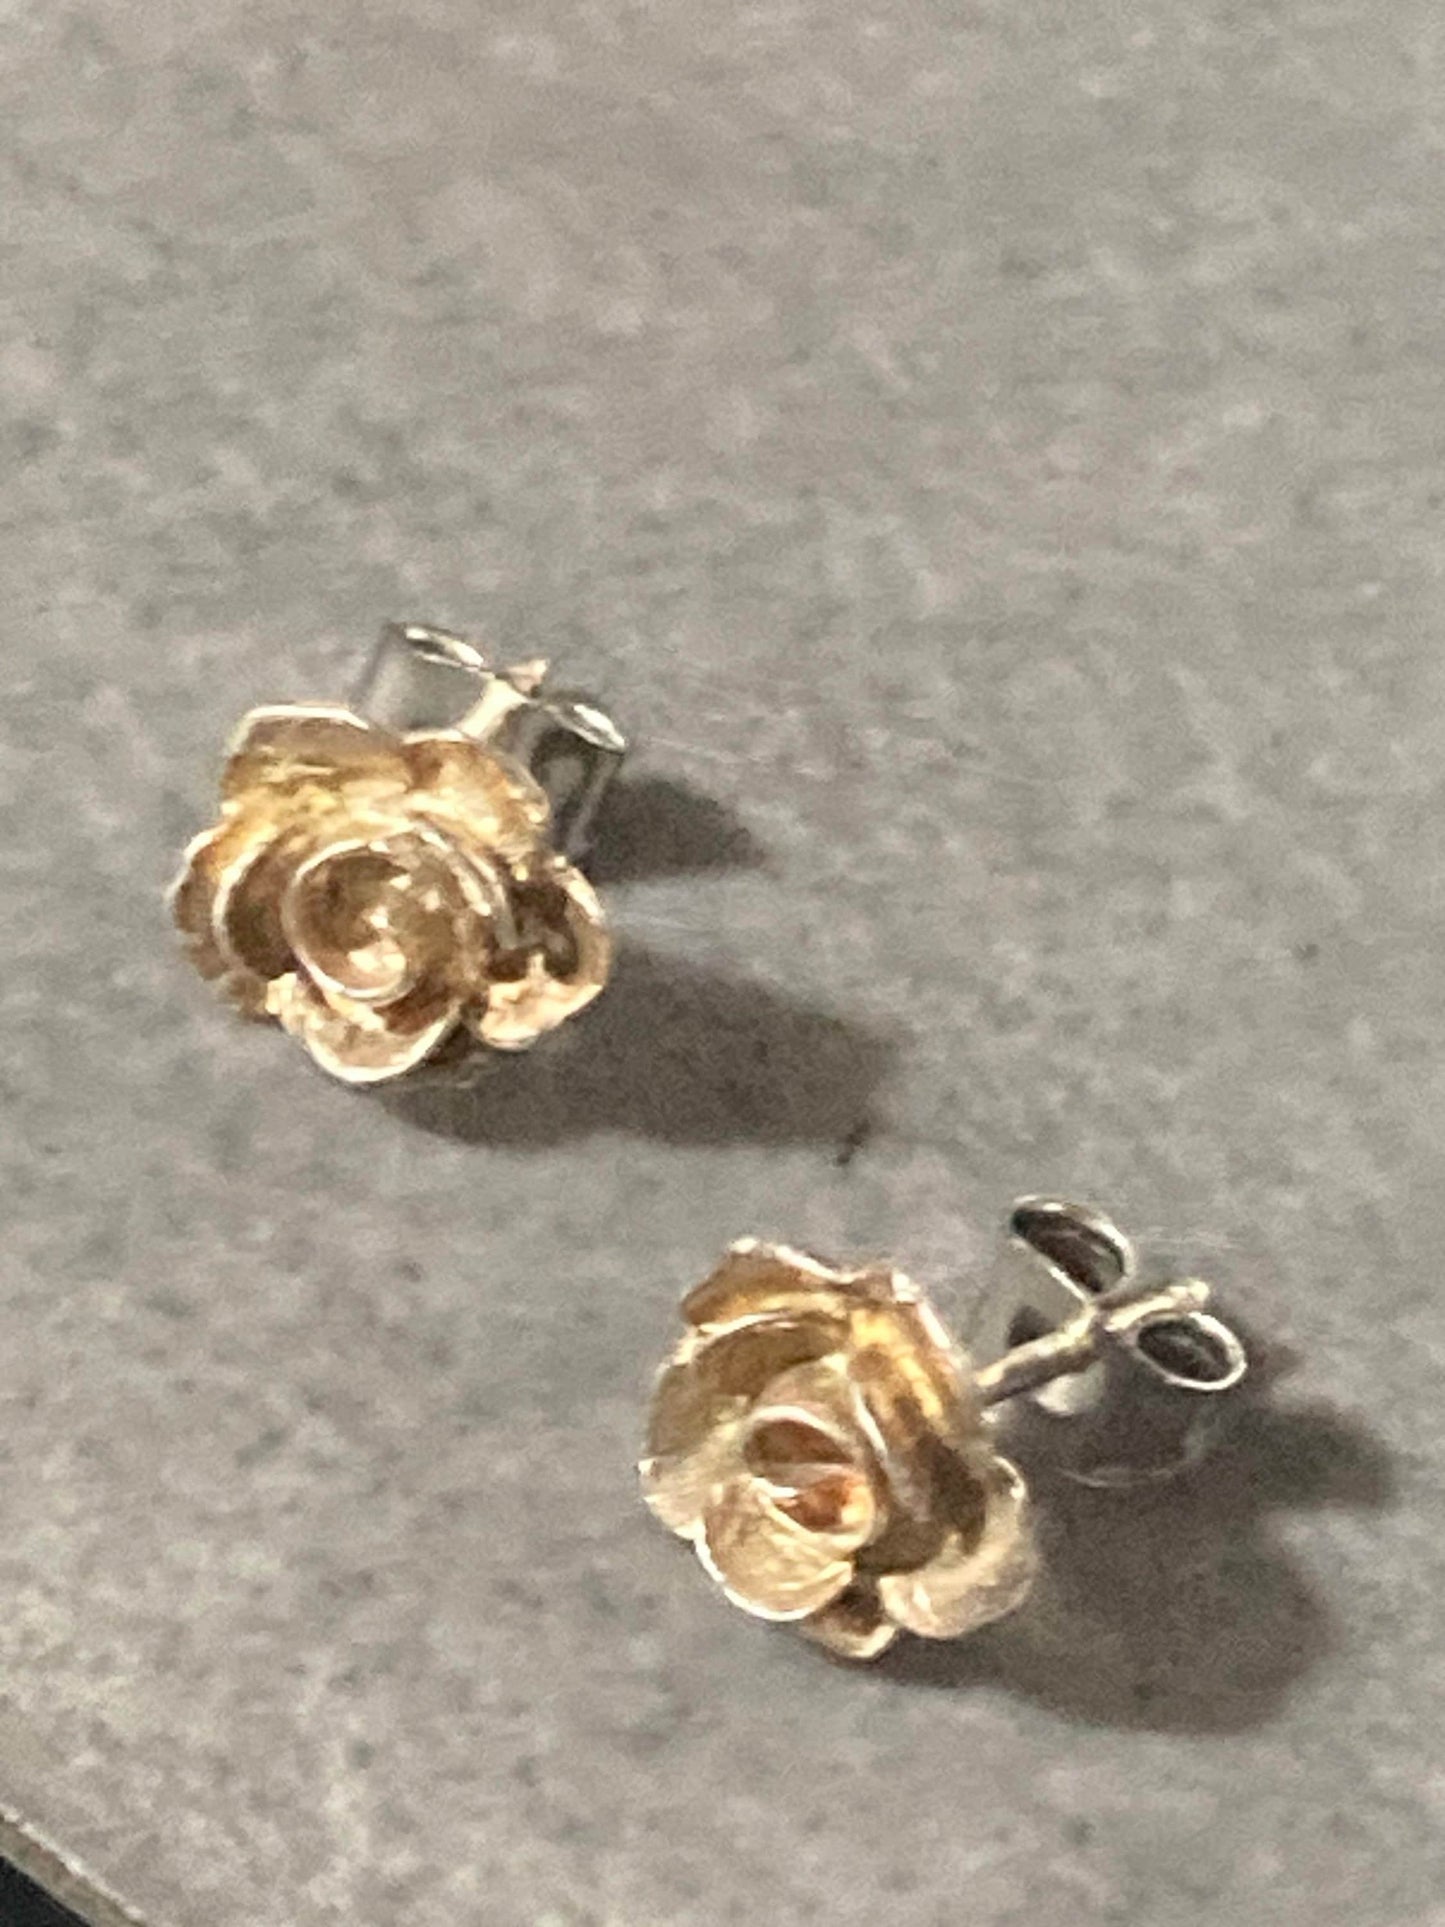 Small 8mm 925 Sterling silver rose flower stud earrings